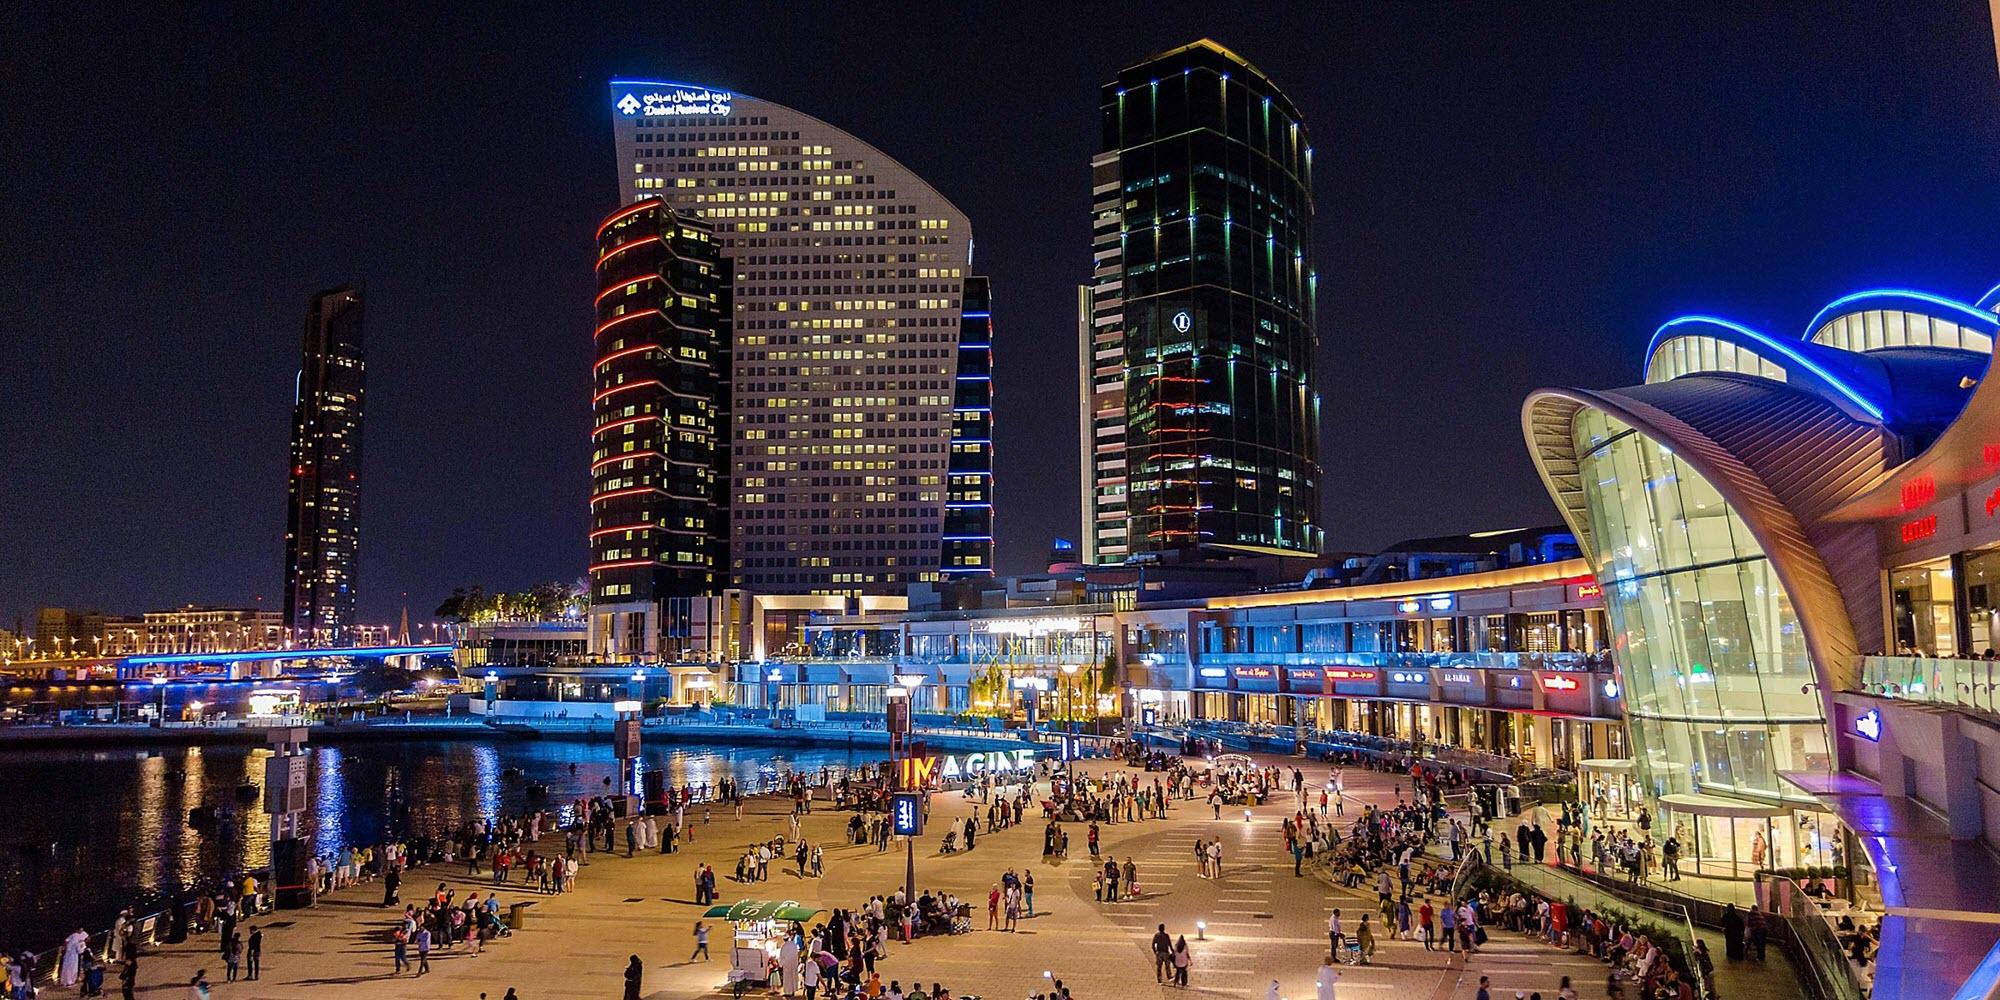  InterContinental Dubai Festival City Night View